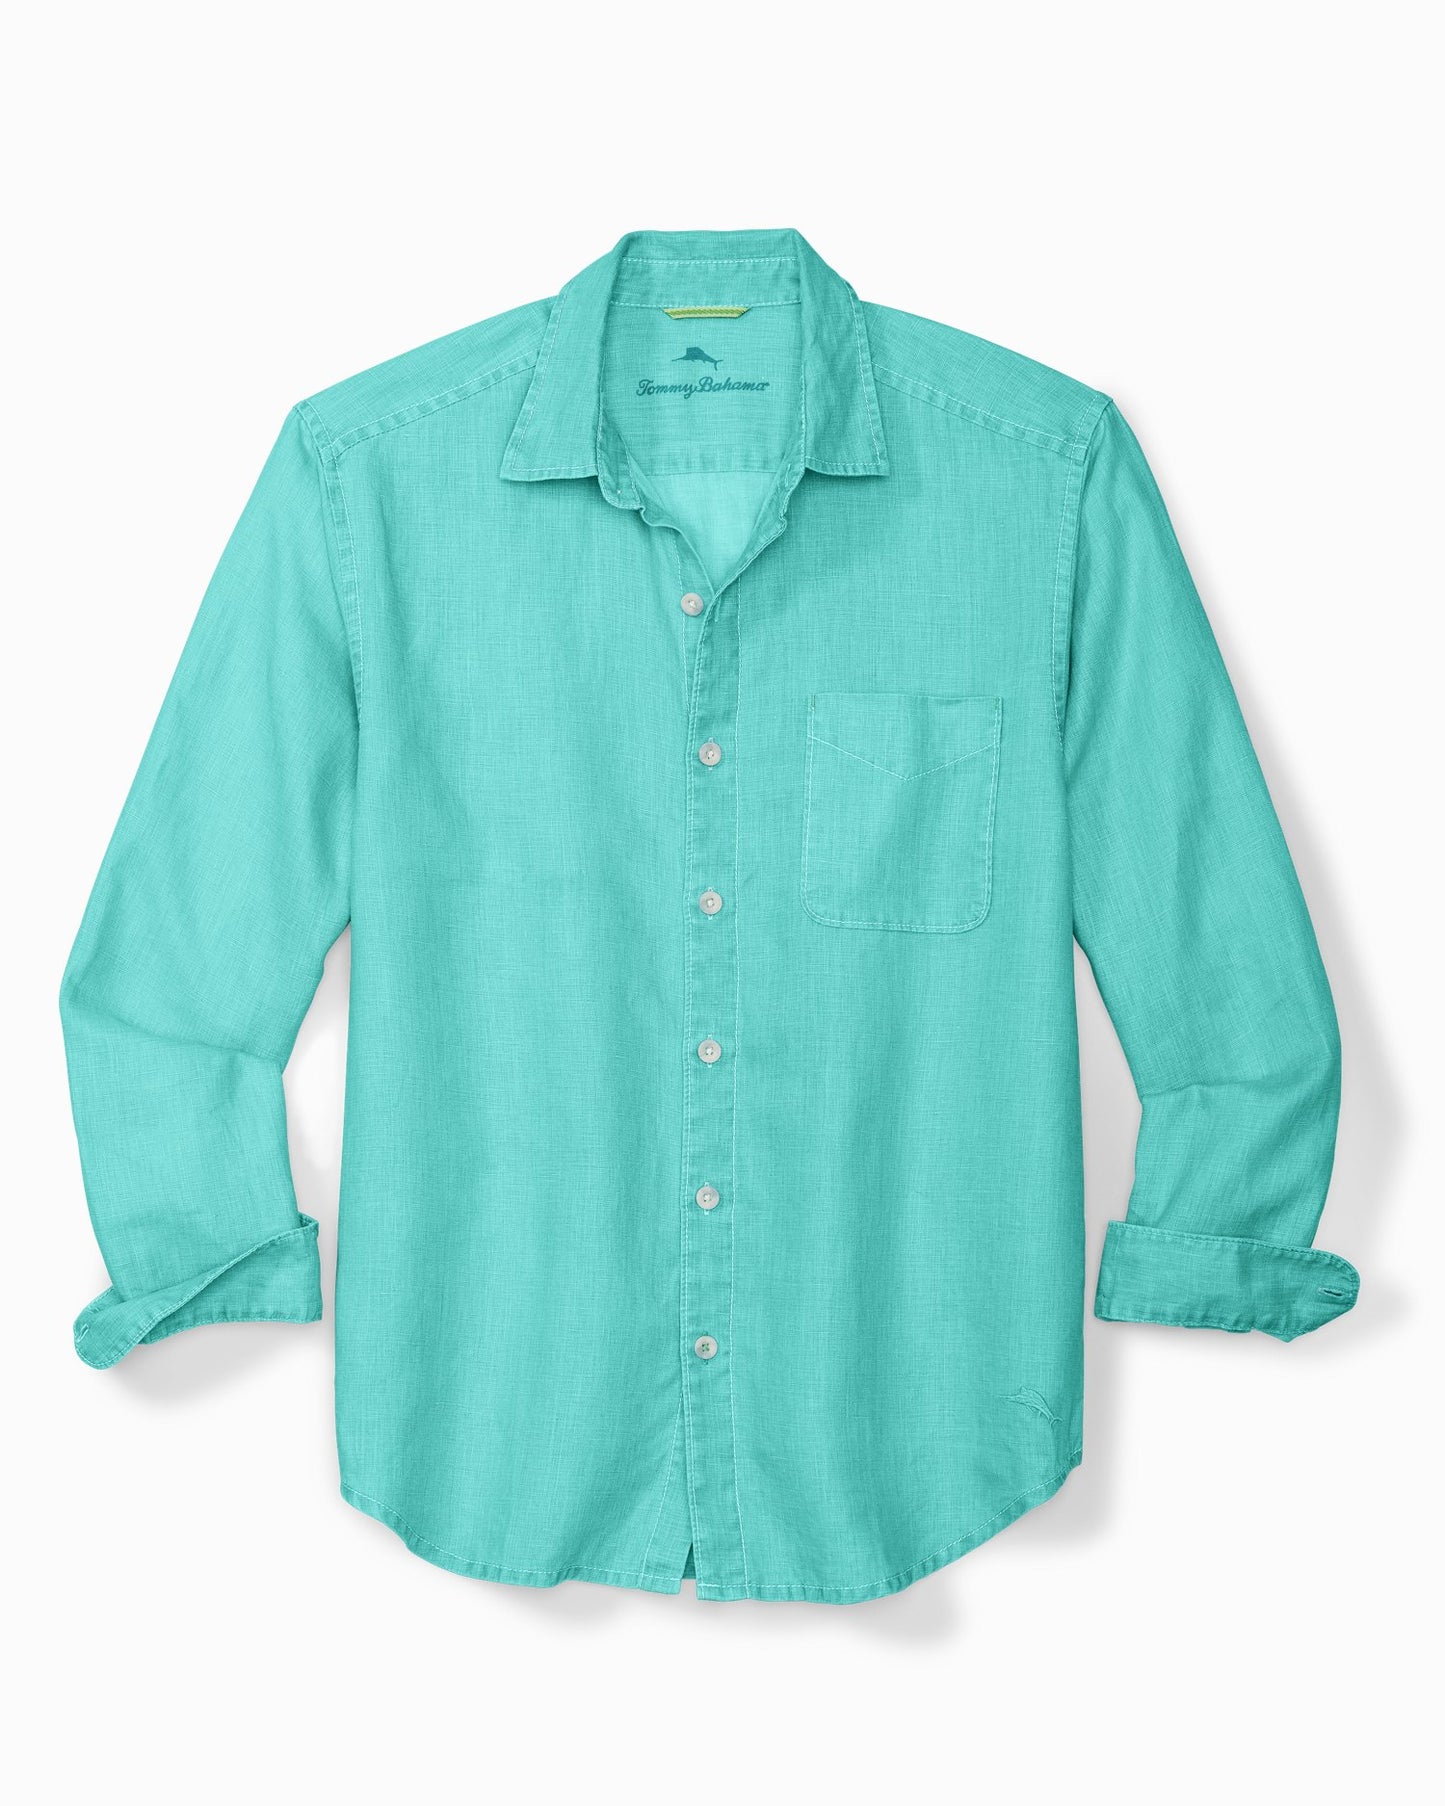 Tommy Bahama Men's Sea Glass Breezer Linen Shirt